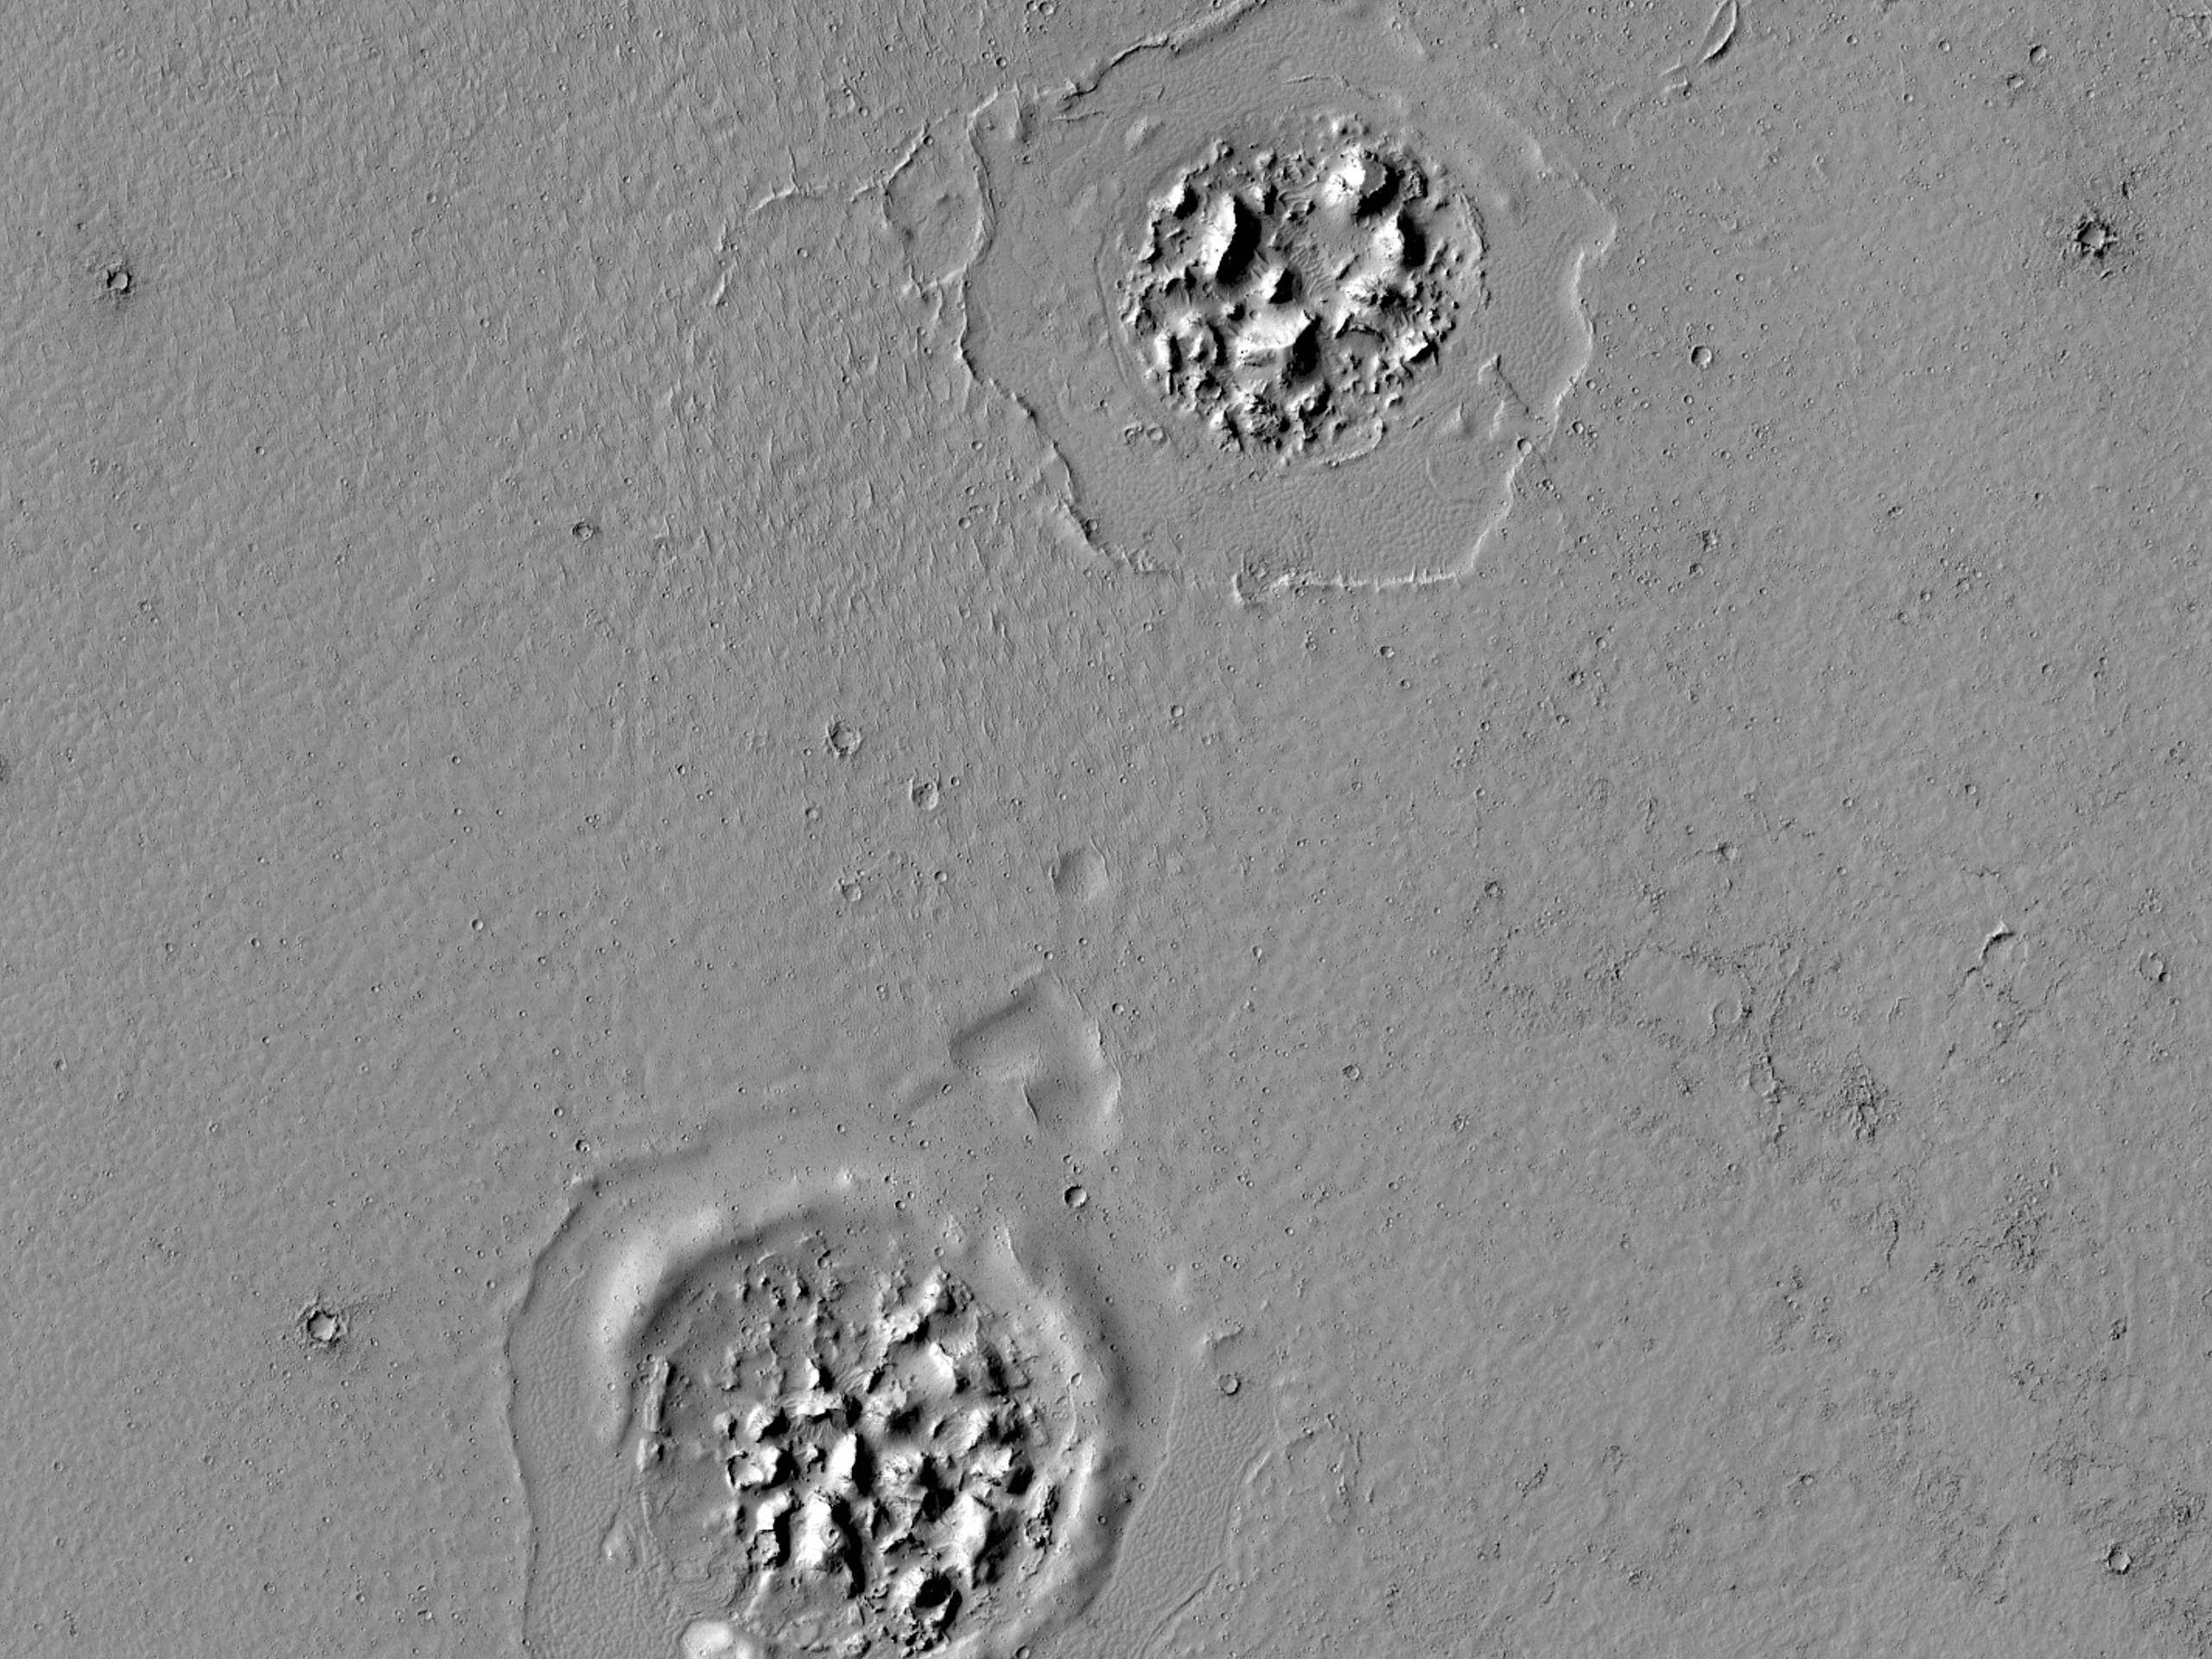 Circular Features in Southern Elysium Planitia